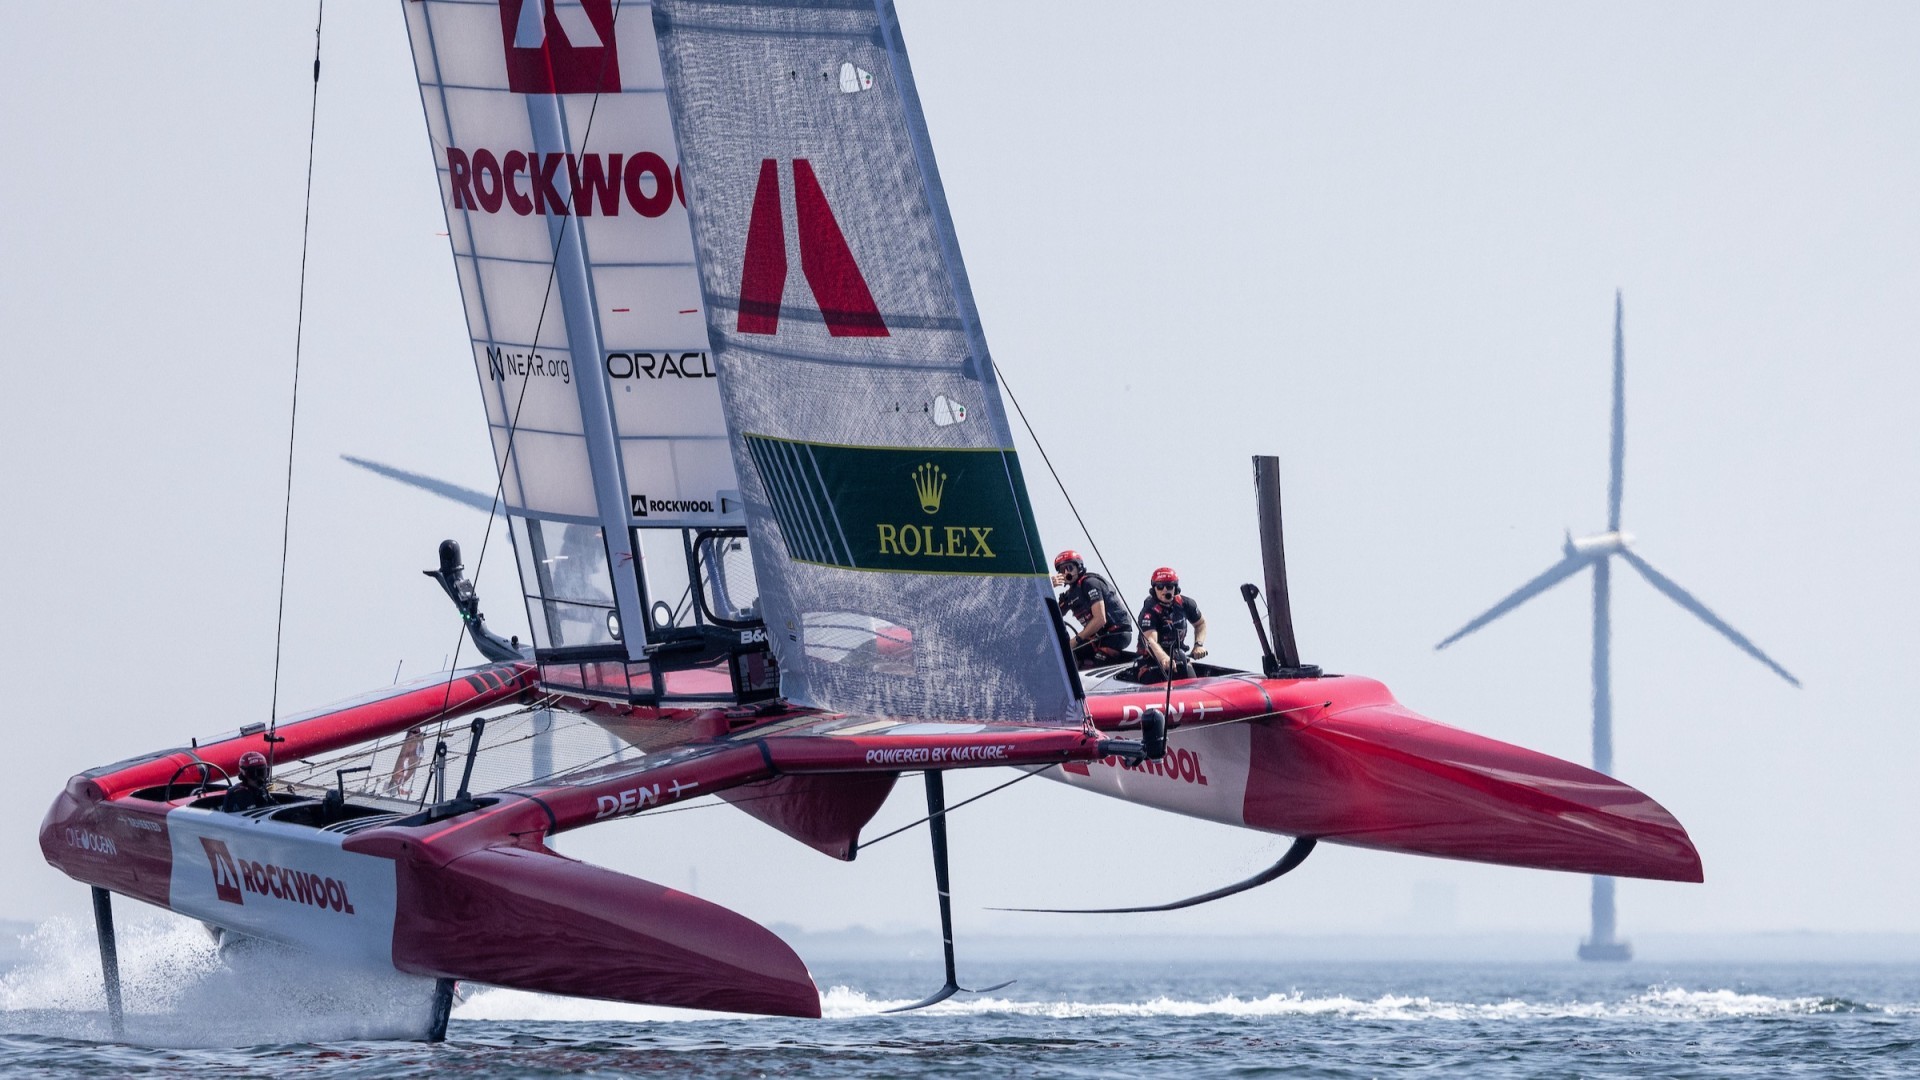 The Denmark SailGP Team has hit home waters ahead of the Rockwool Denmark Sail Grand Prix